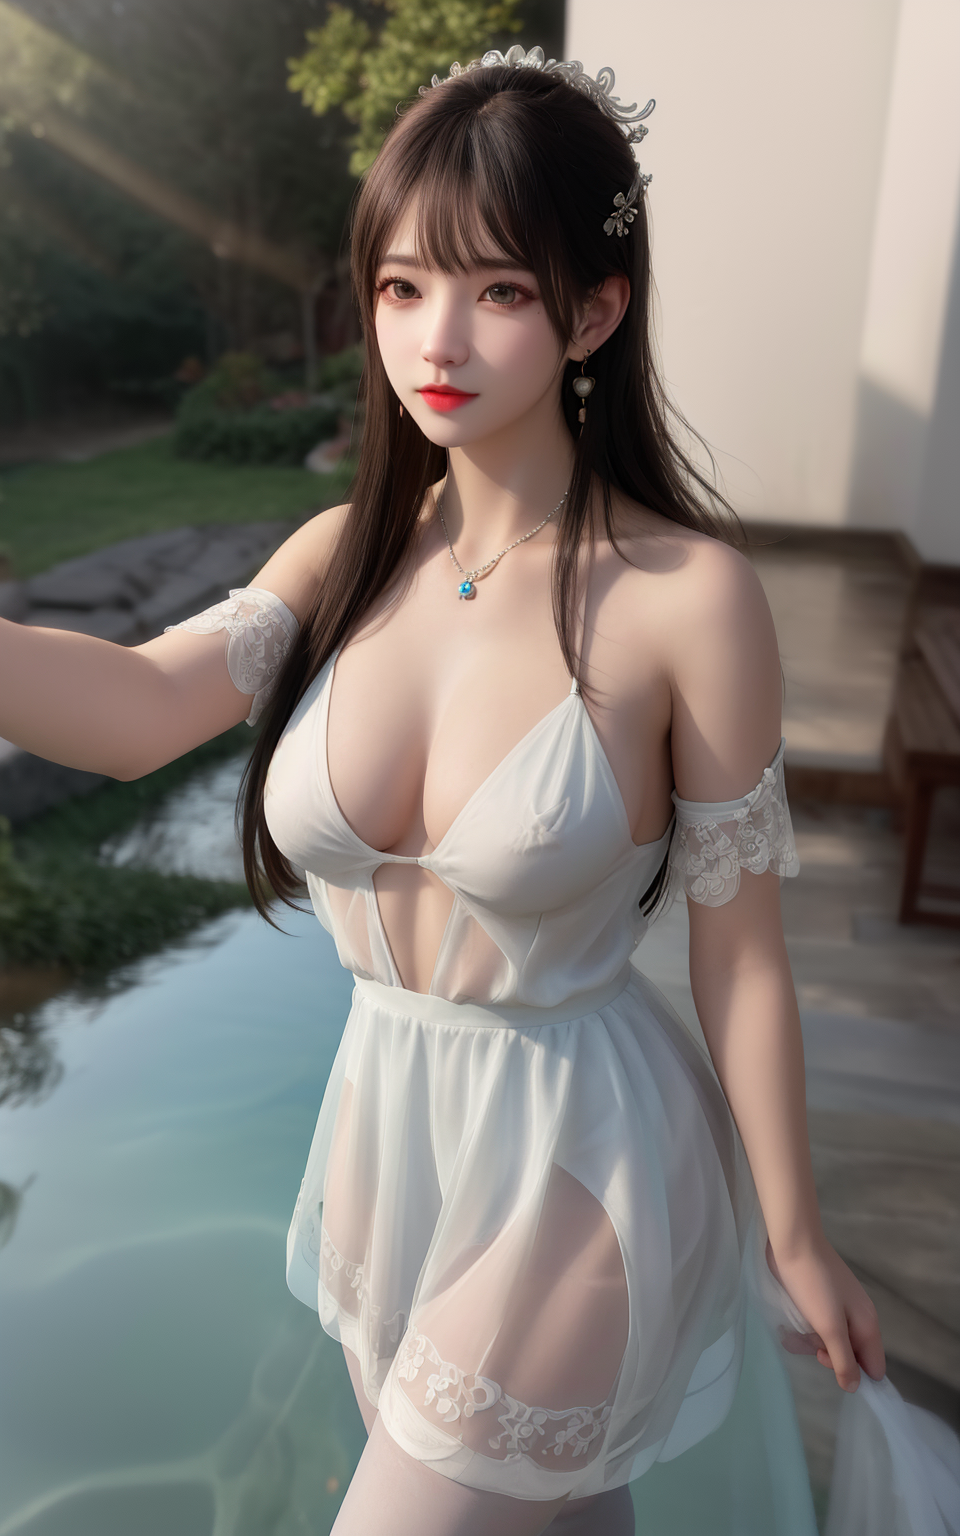 General 960x1536 AI art boobs white skirt white dress chinese dress Asian women portrait display long hair earring sunlight water reflection standing cleavage blurred blurry background digital art